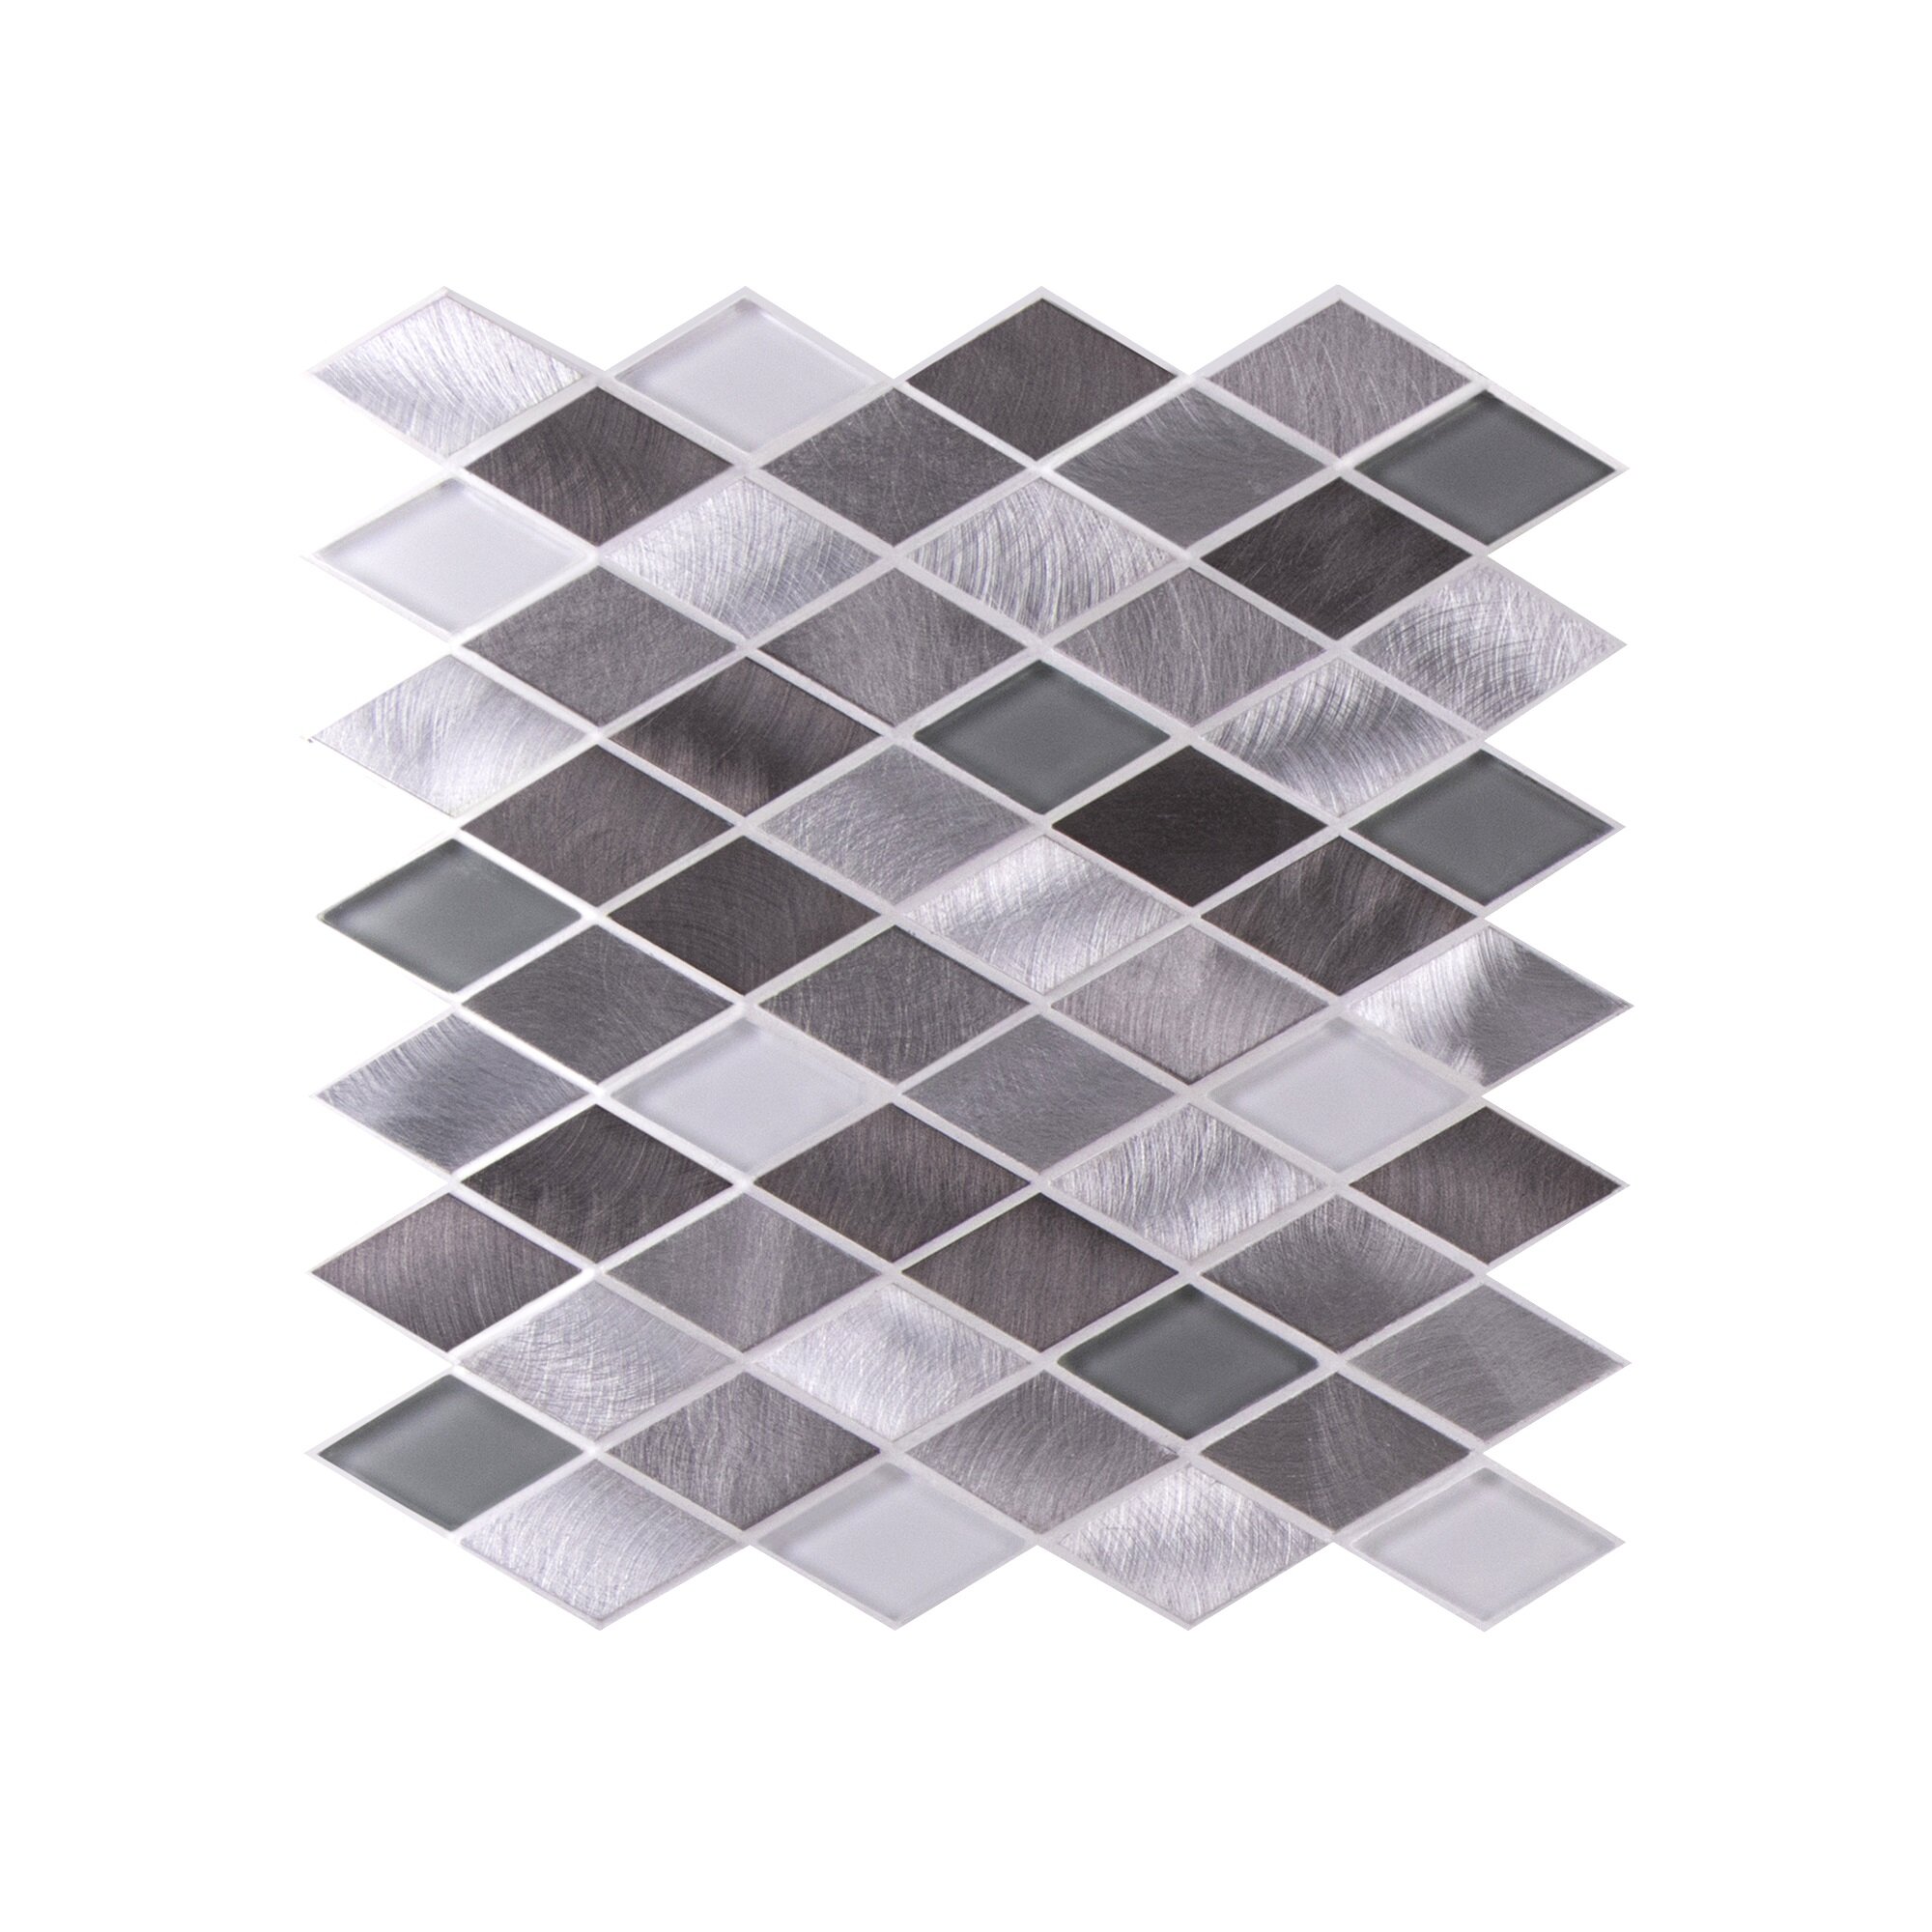 Ws Tiles Twilight Series 2 X 2 Grid Mosaic Tile Reviews Wayfair